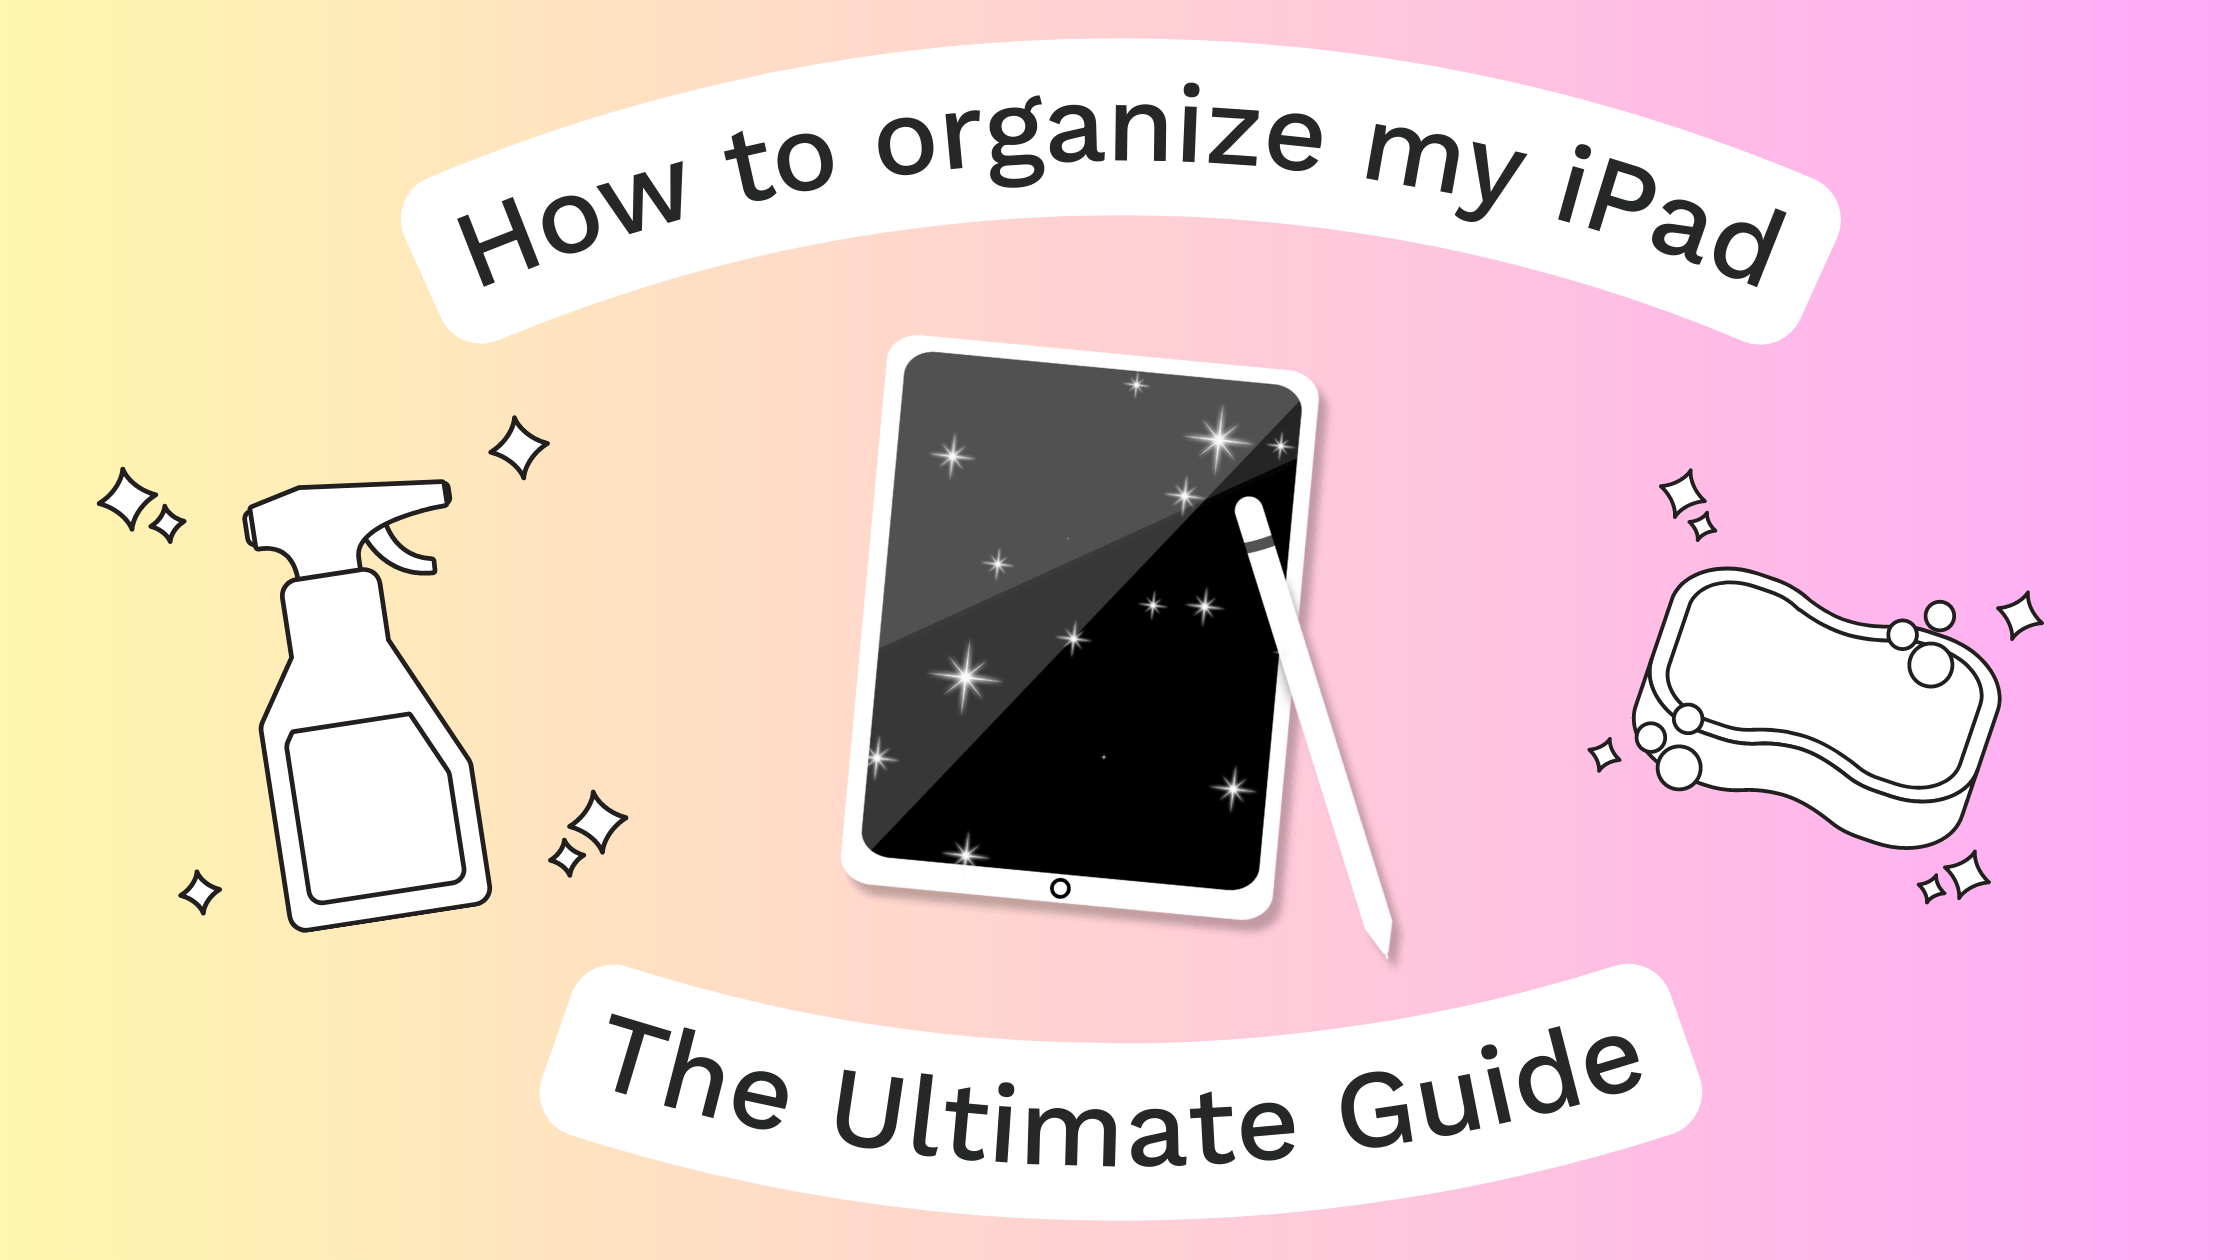 How to organize my ipad